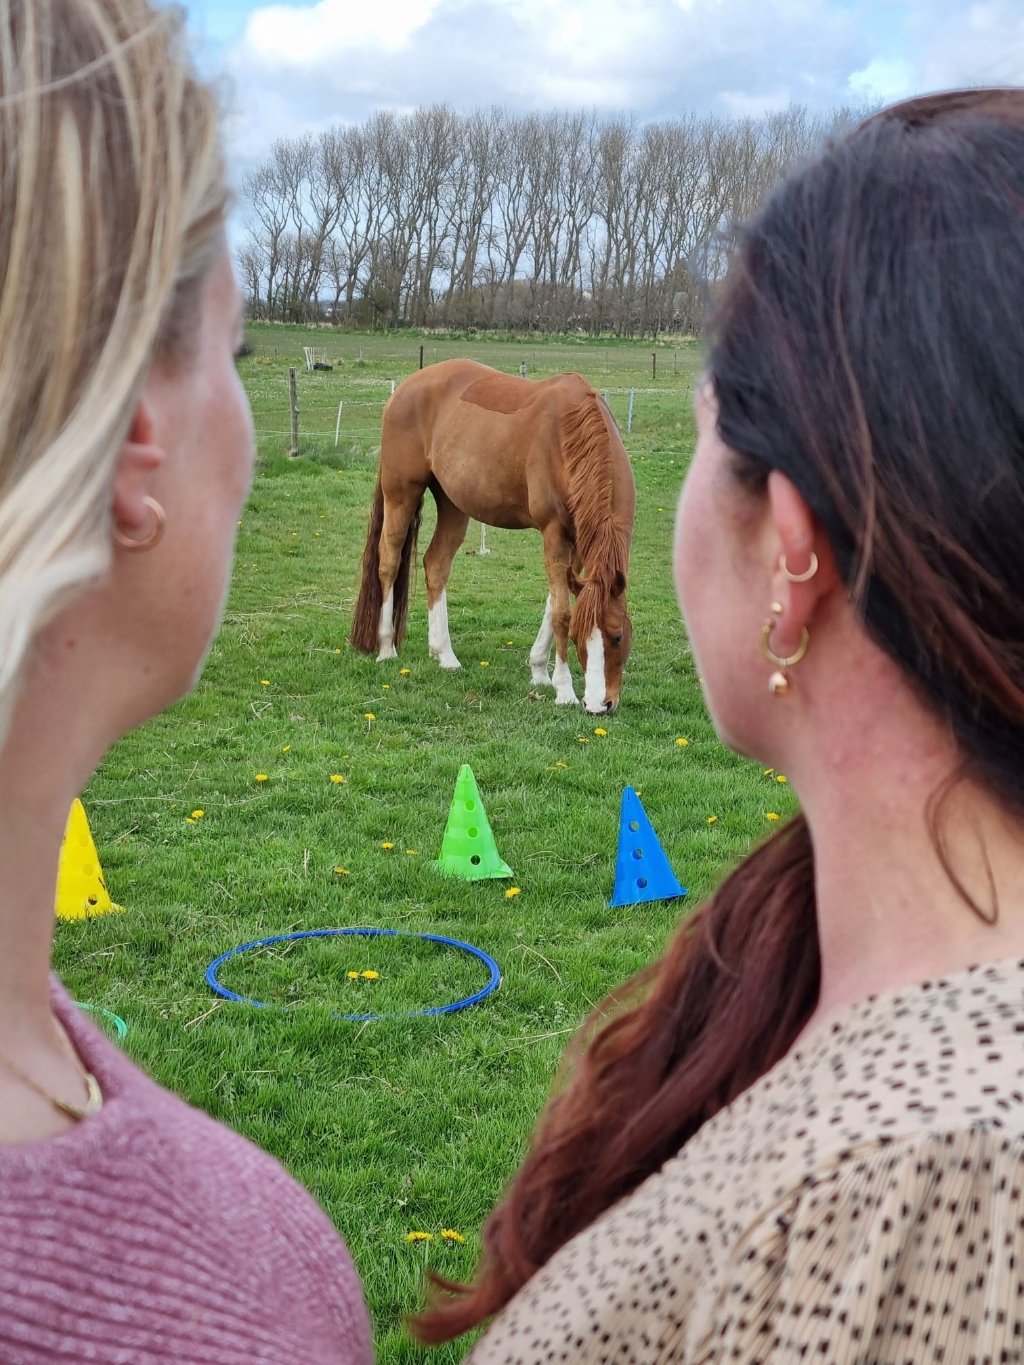 Leren oplossingsgericht communiceren m.b.v. paarden 